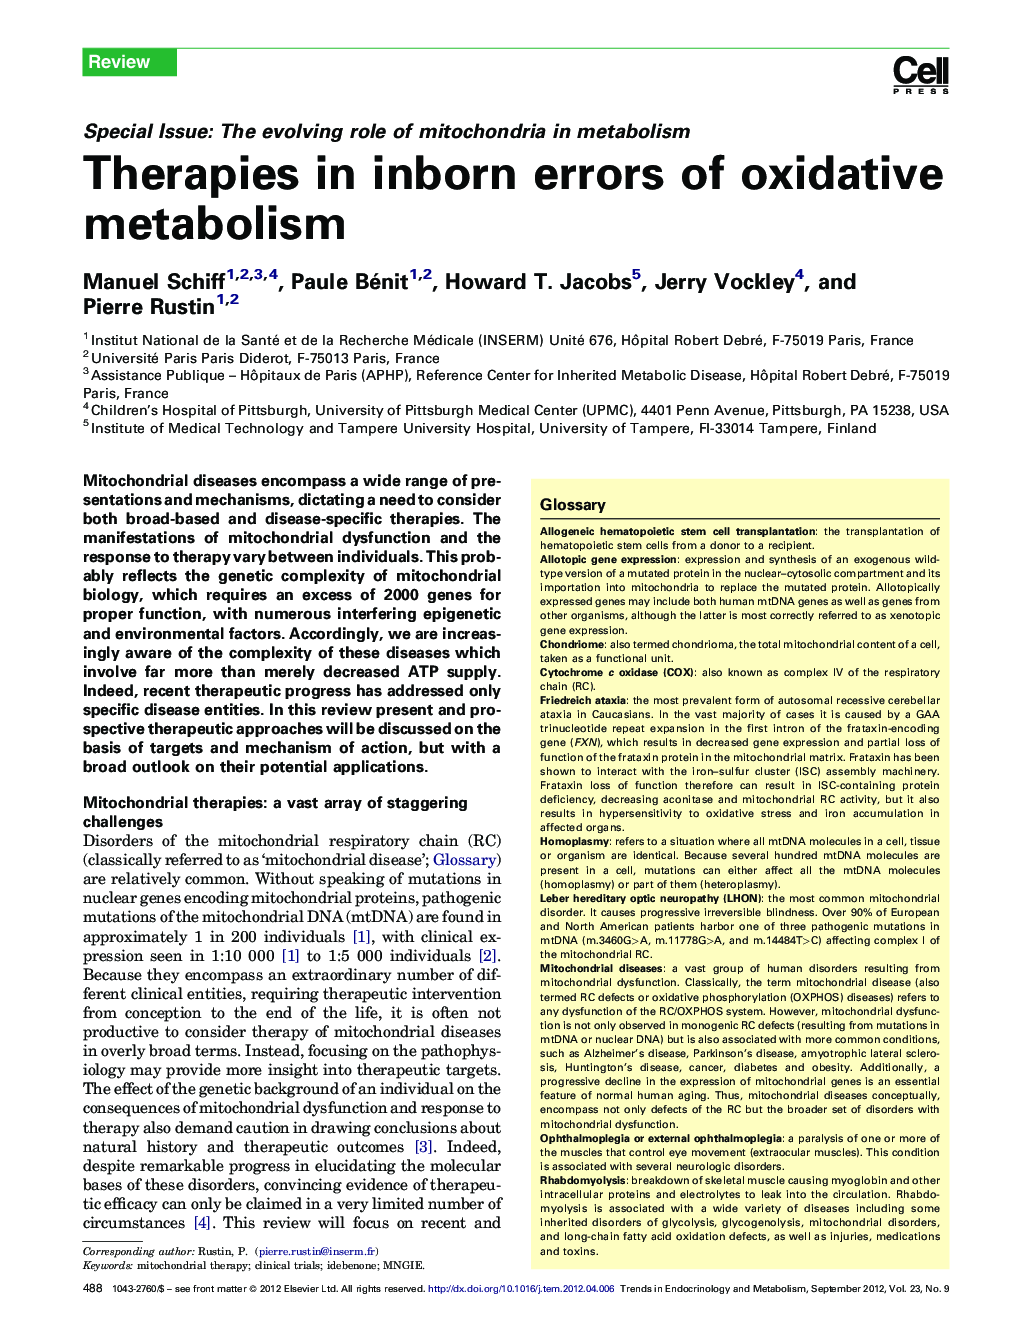 Therapies in inborn errors of oxidative metabolism